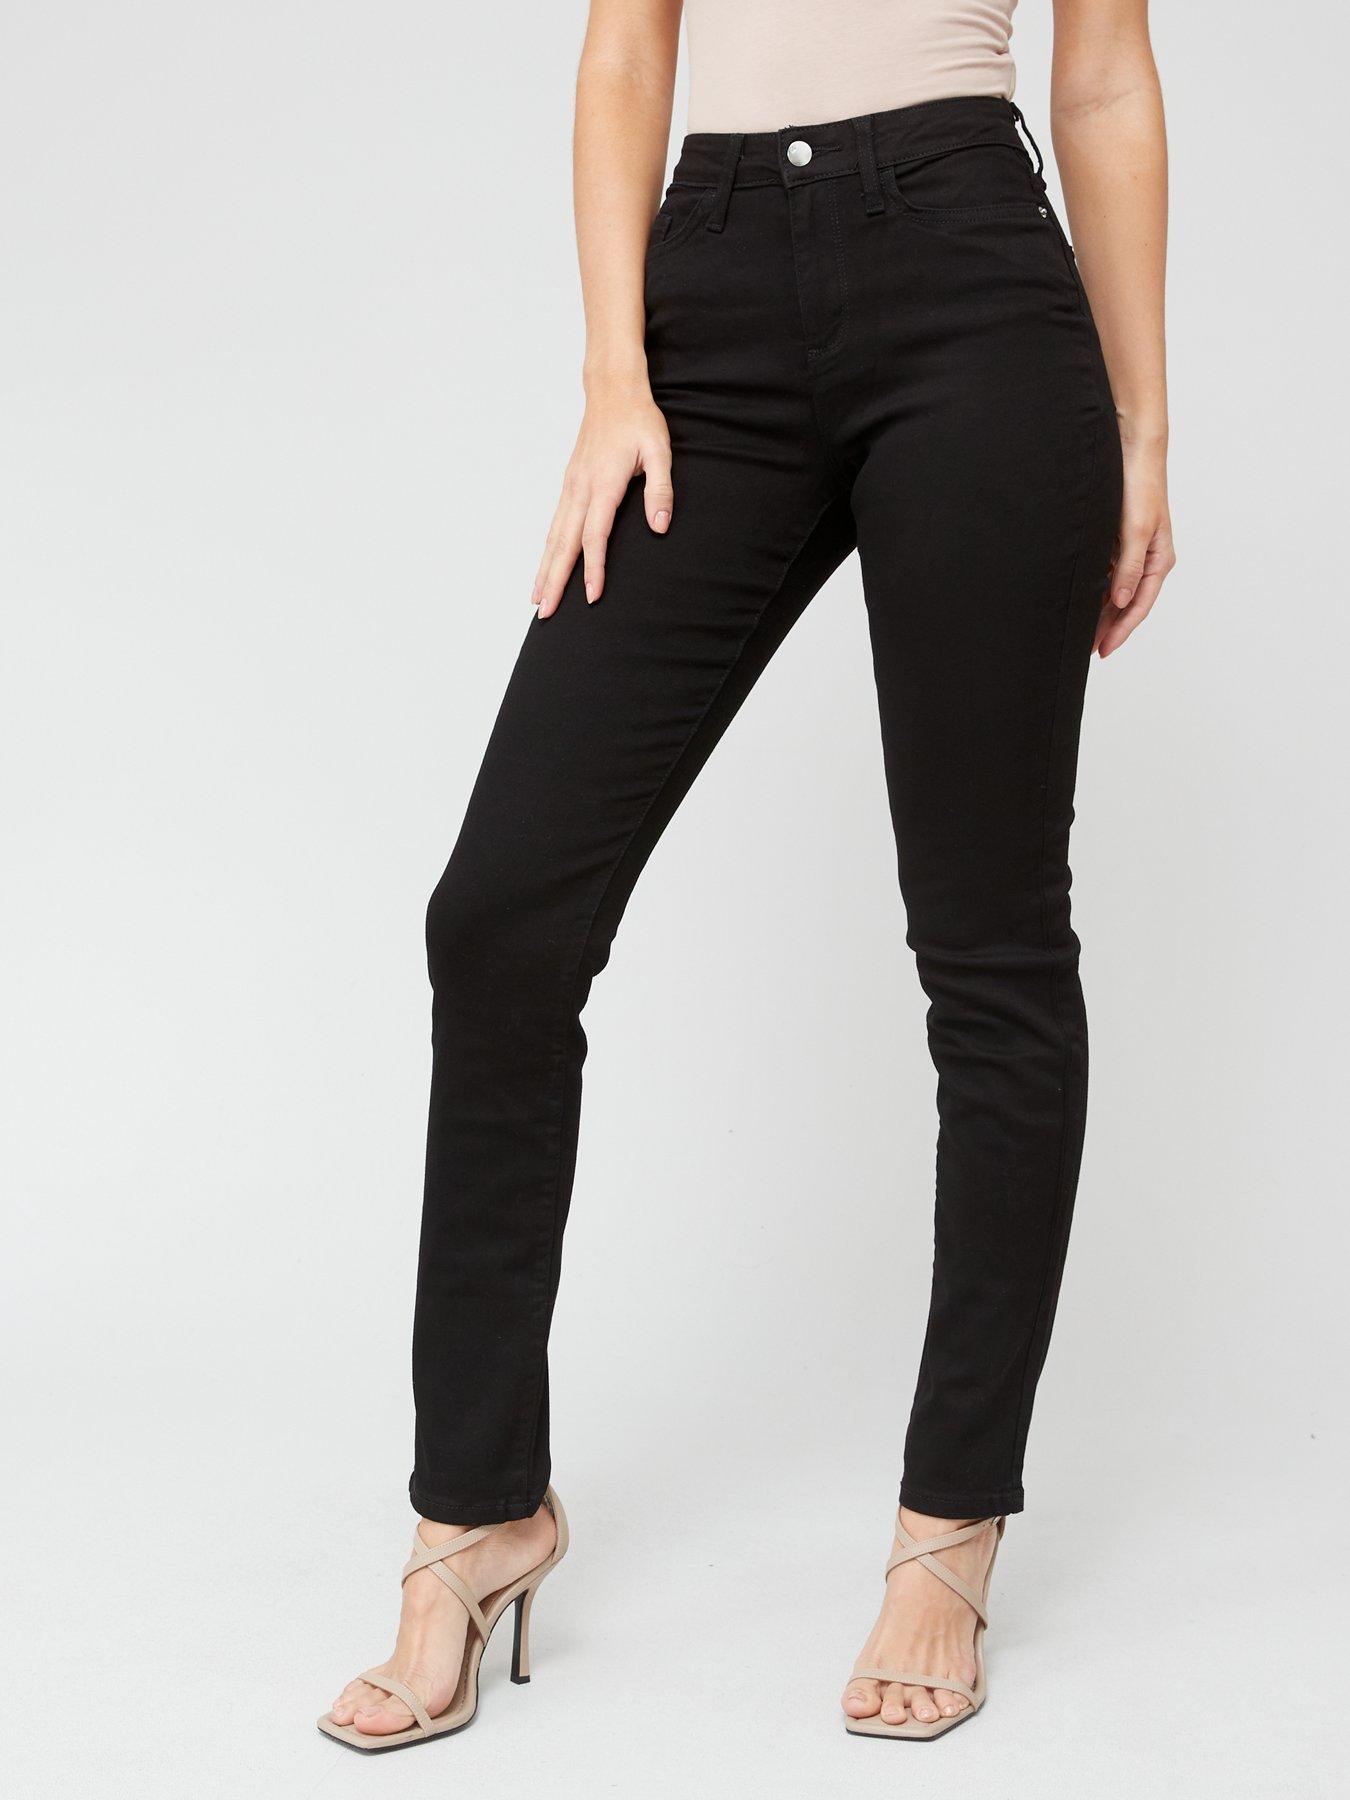 Black Women's Jeans, All Styles & Sizes